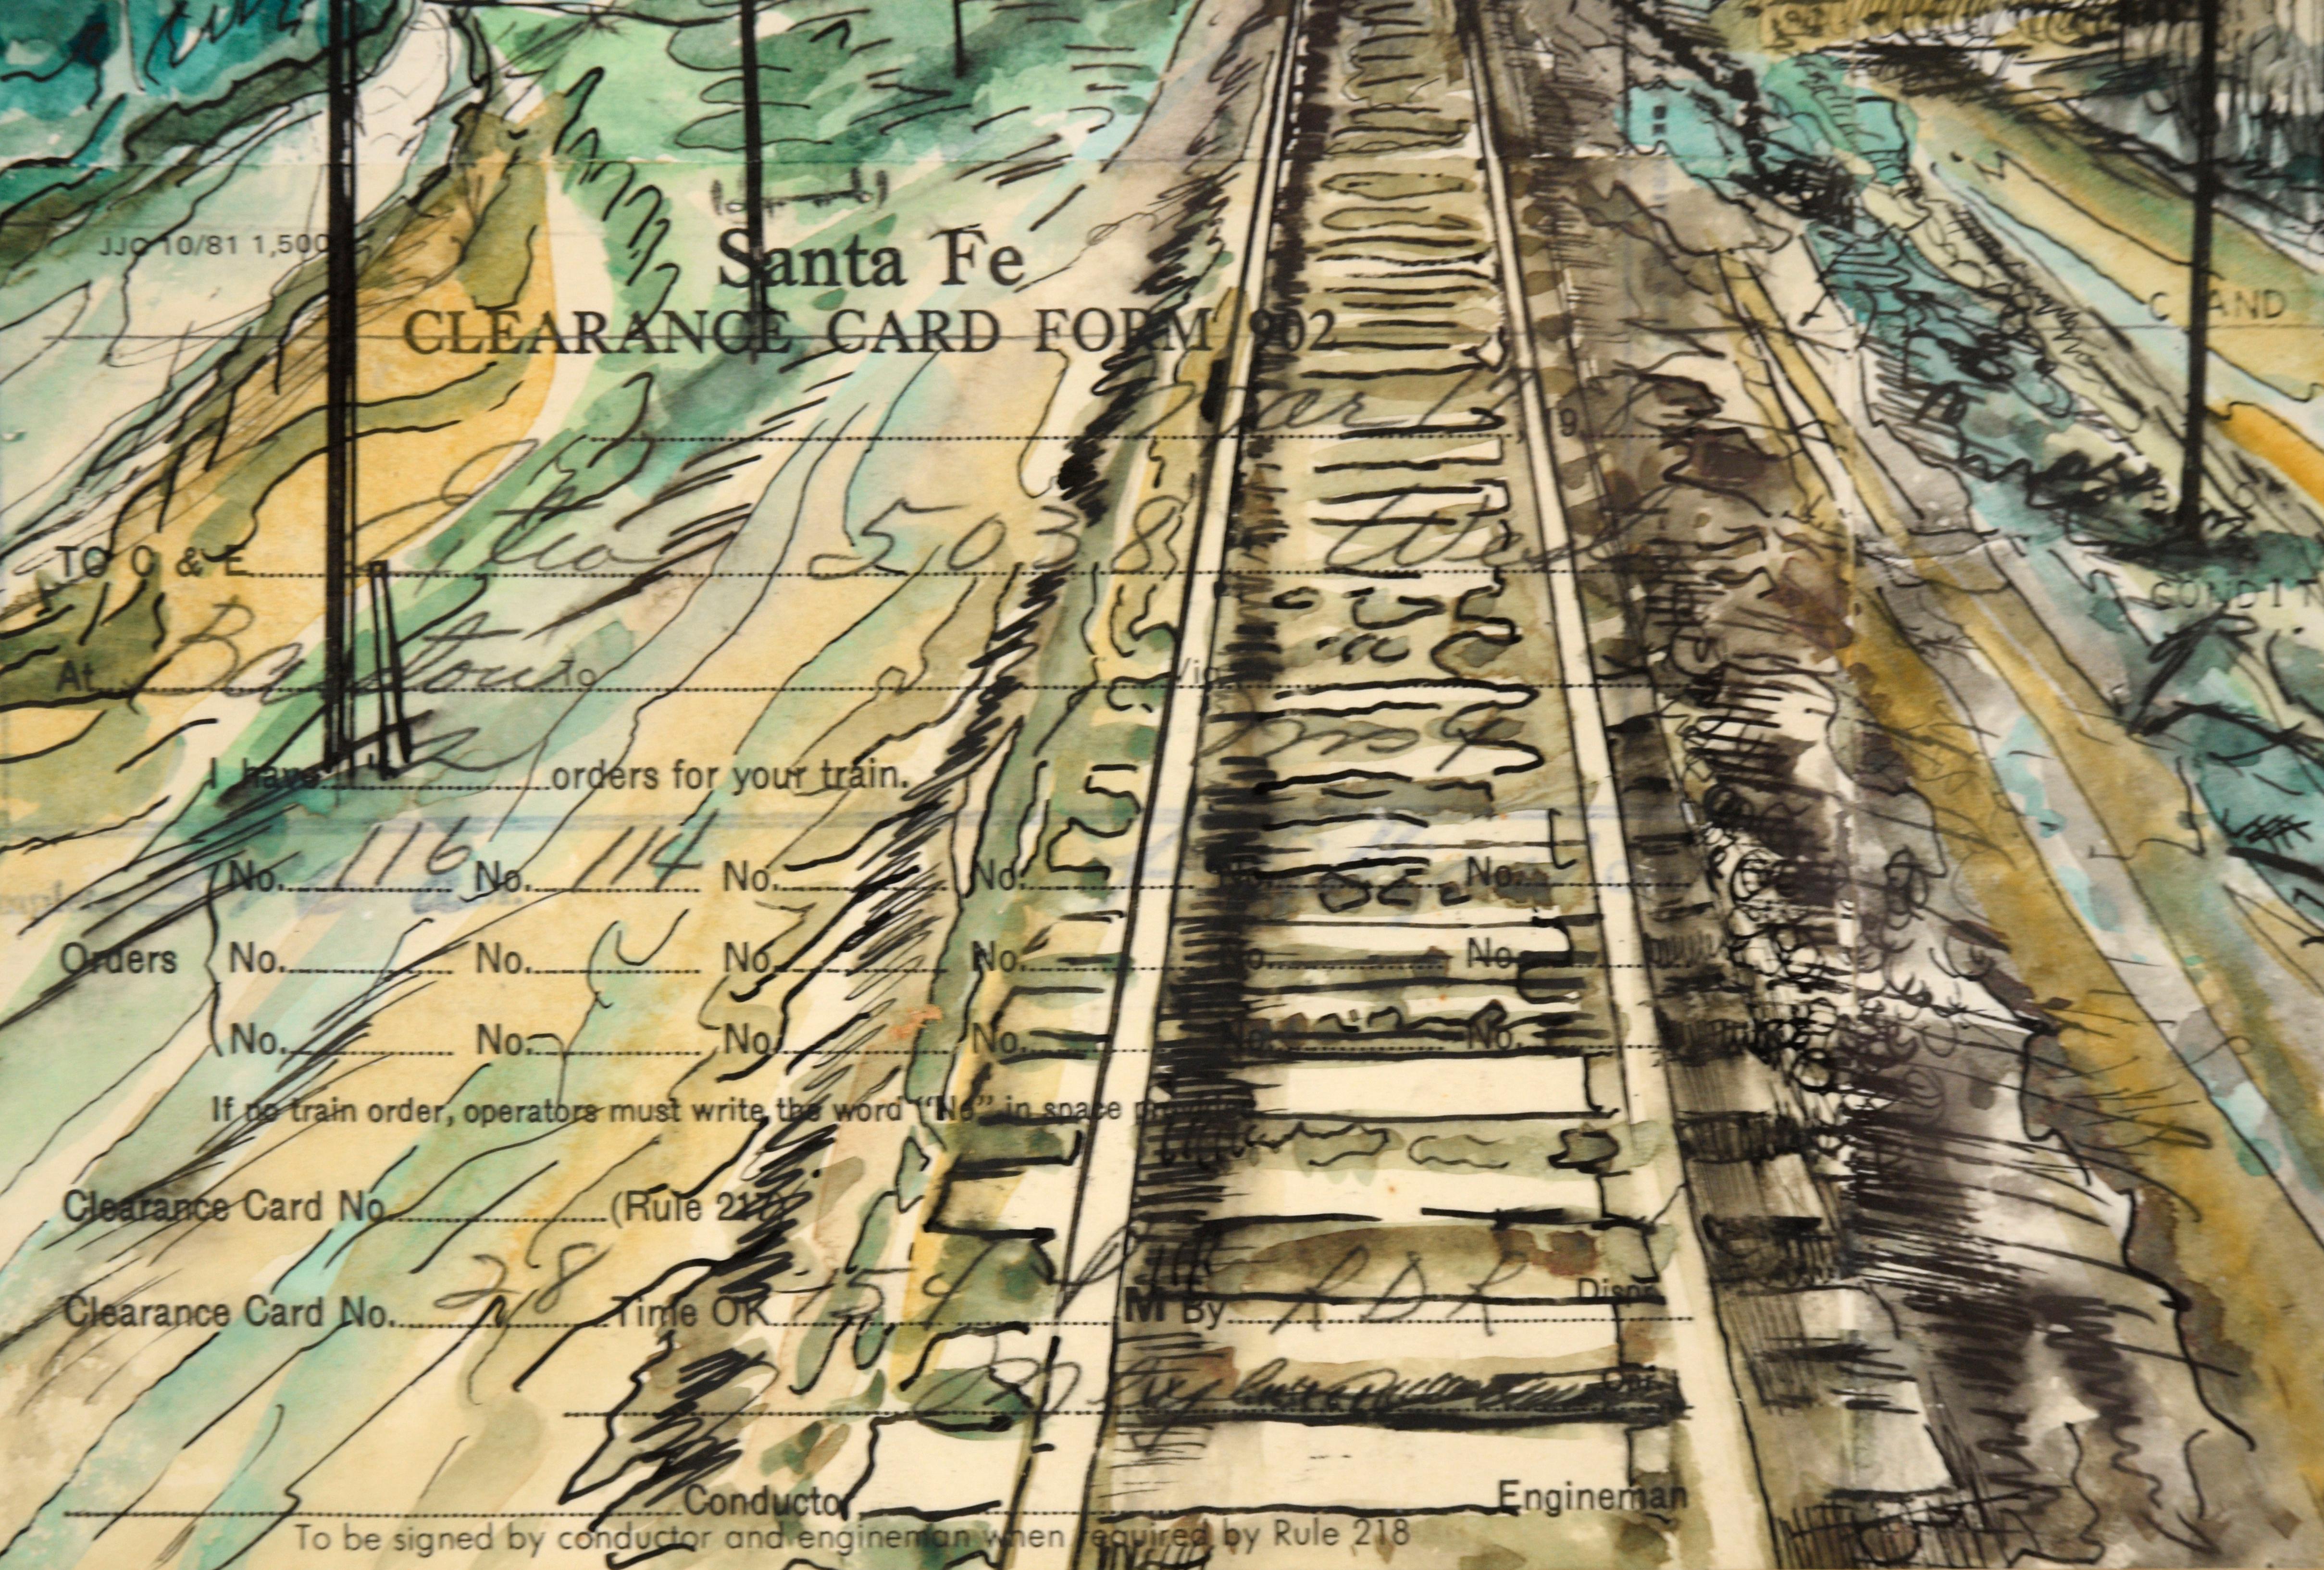 Santa Fe Railroad Tracks Watercolor Original Santa Fe Railroad Train Order Form - Brown Landscape Art by T. Scott Sayre